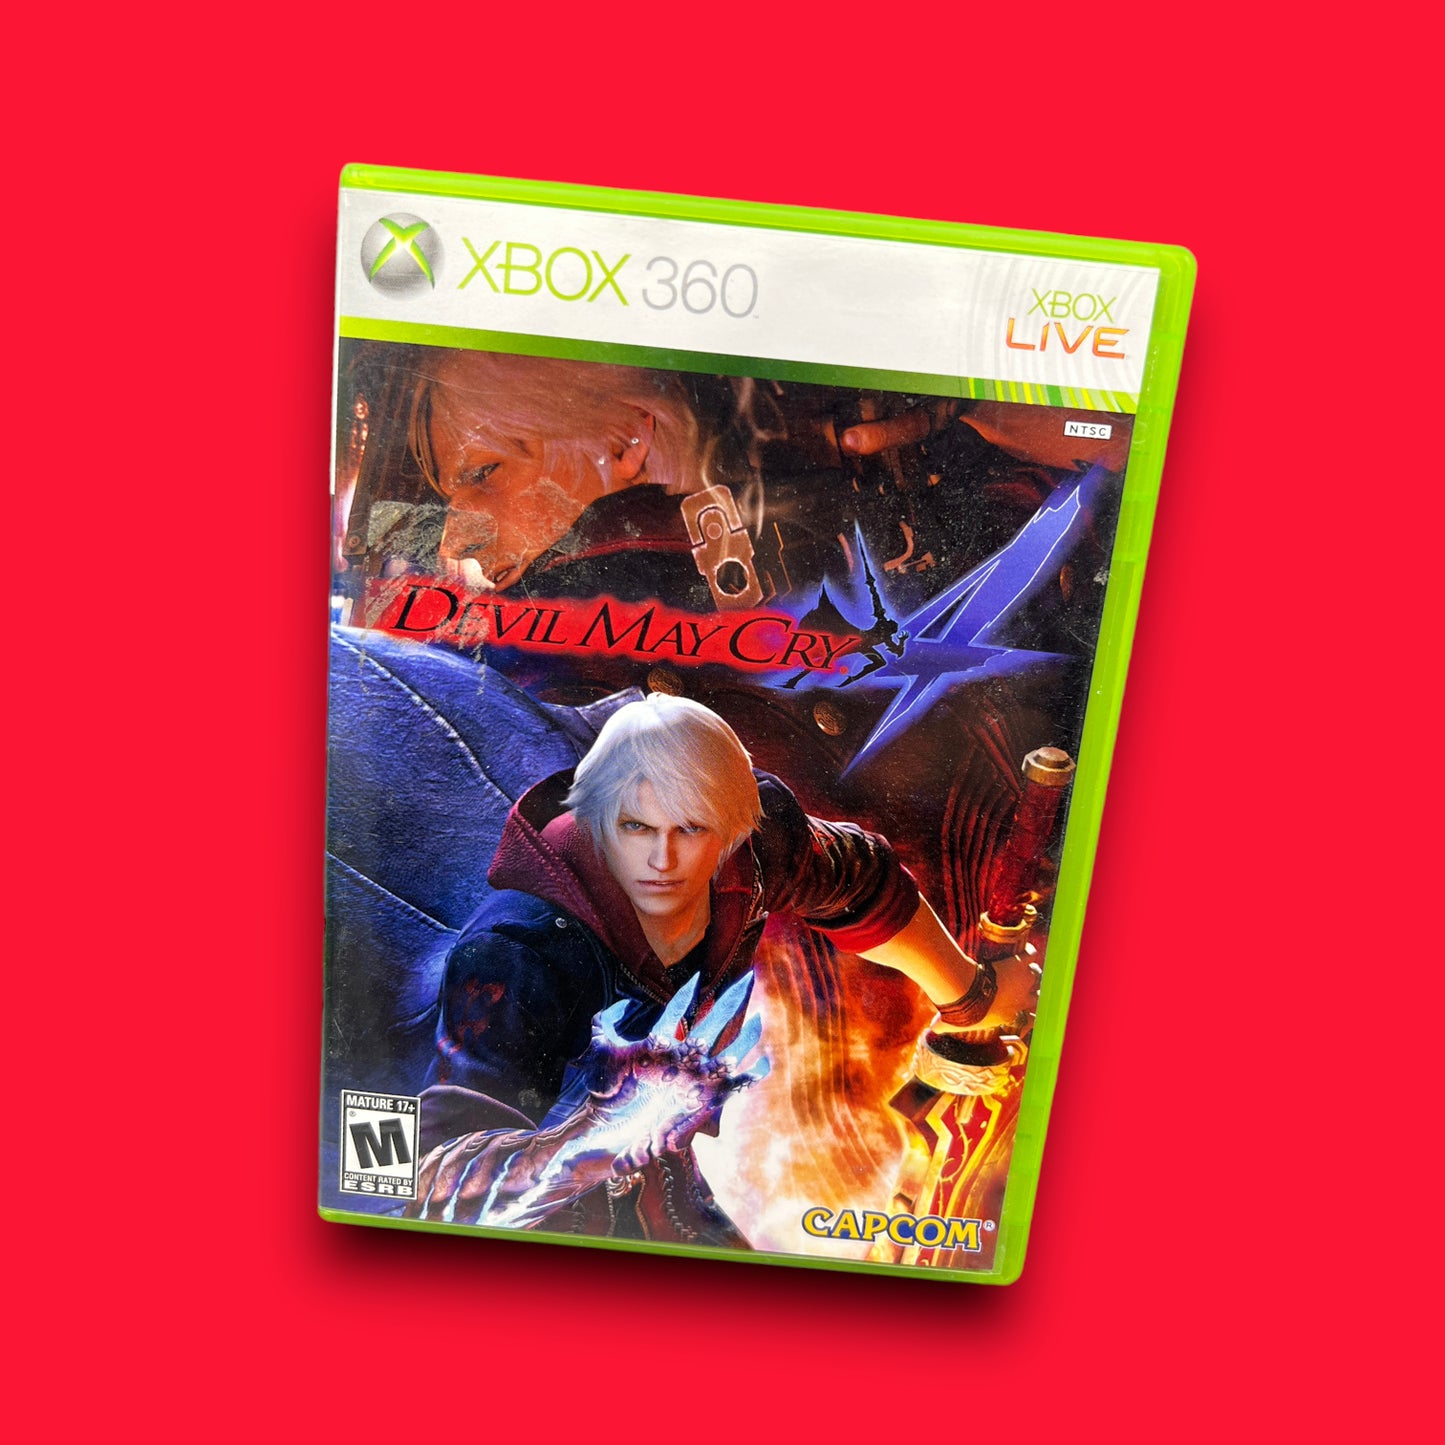 Devil May Cry 4 (Microsoft Xbox 360, 2008)